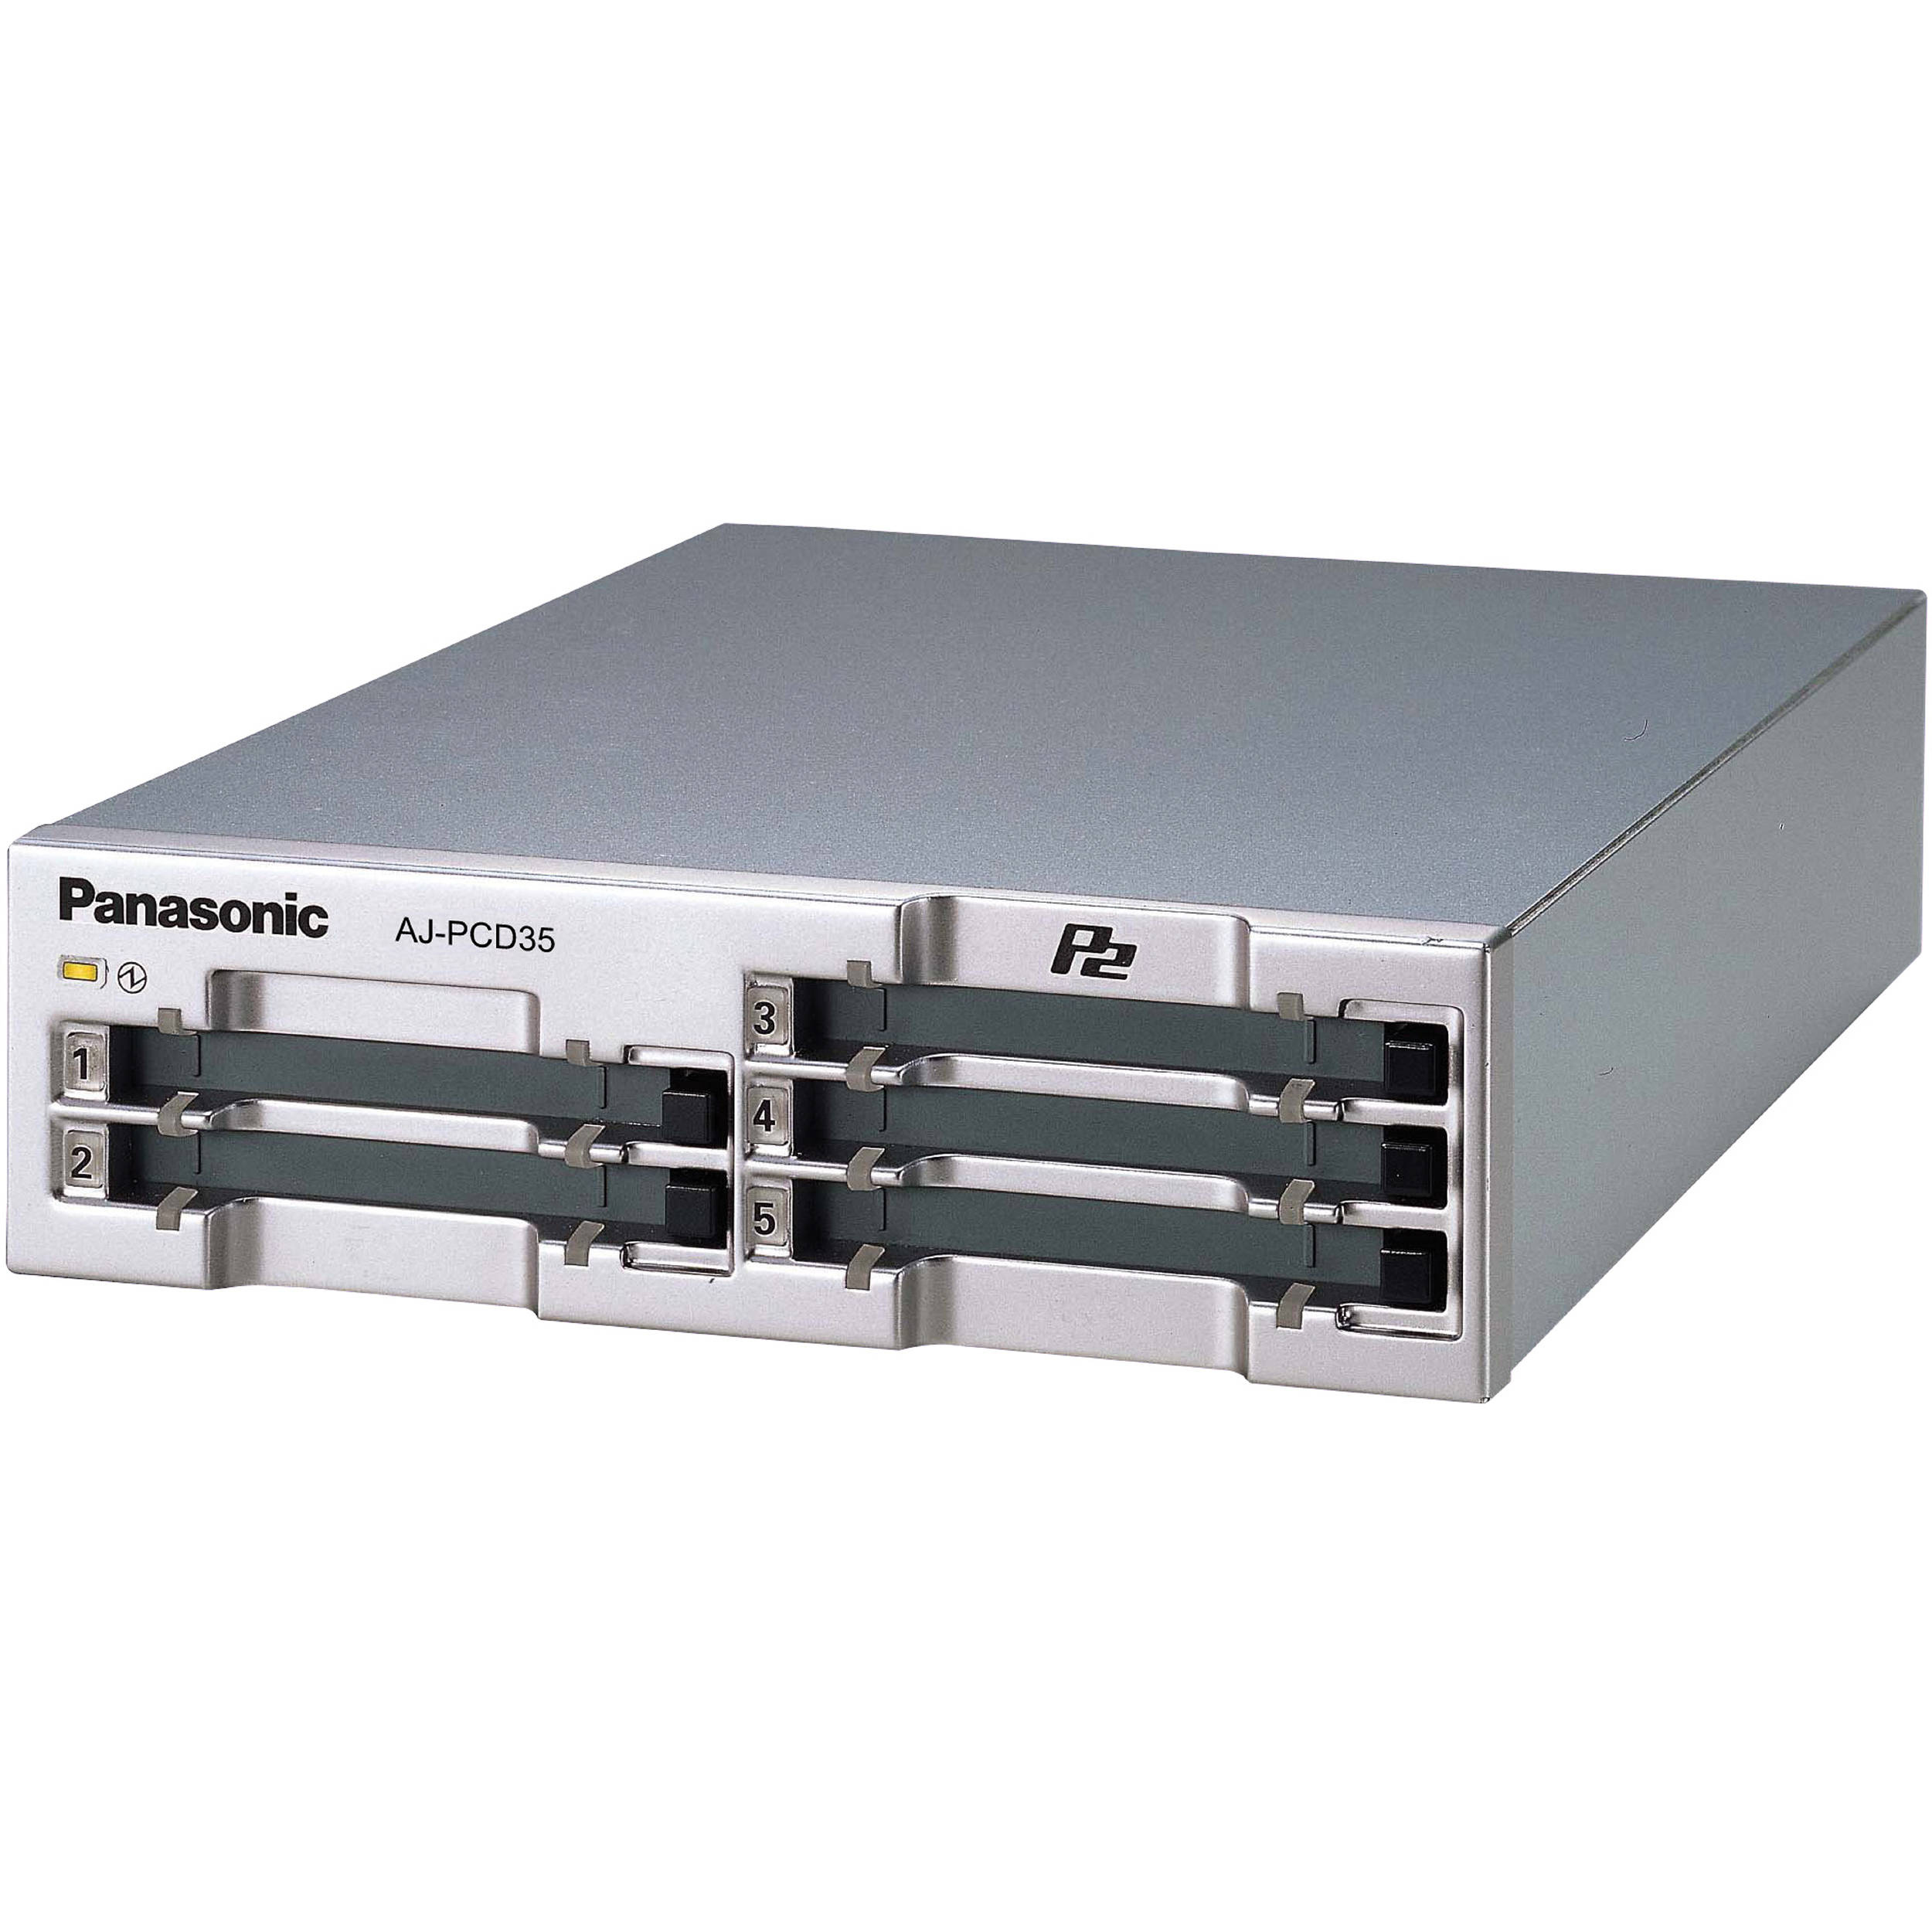 Panasonic P2 Card Drive with PCIe AJ-PCD35E